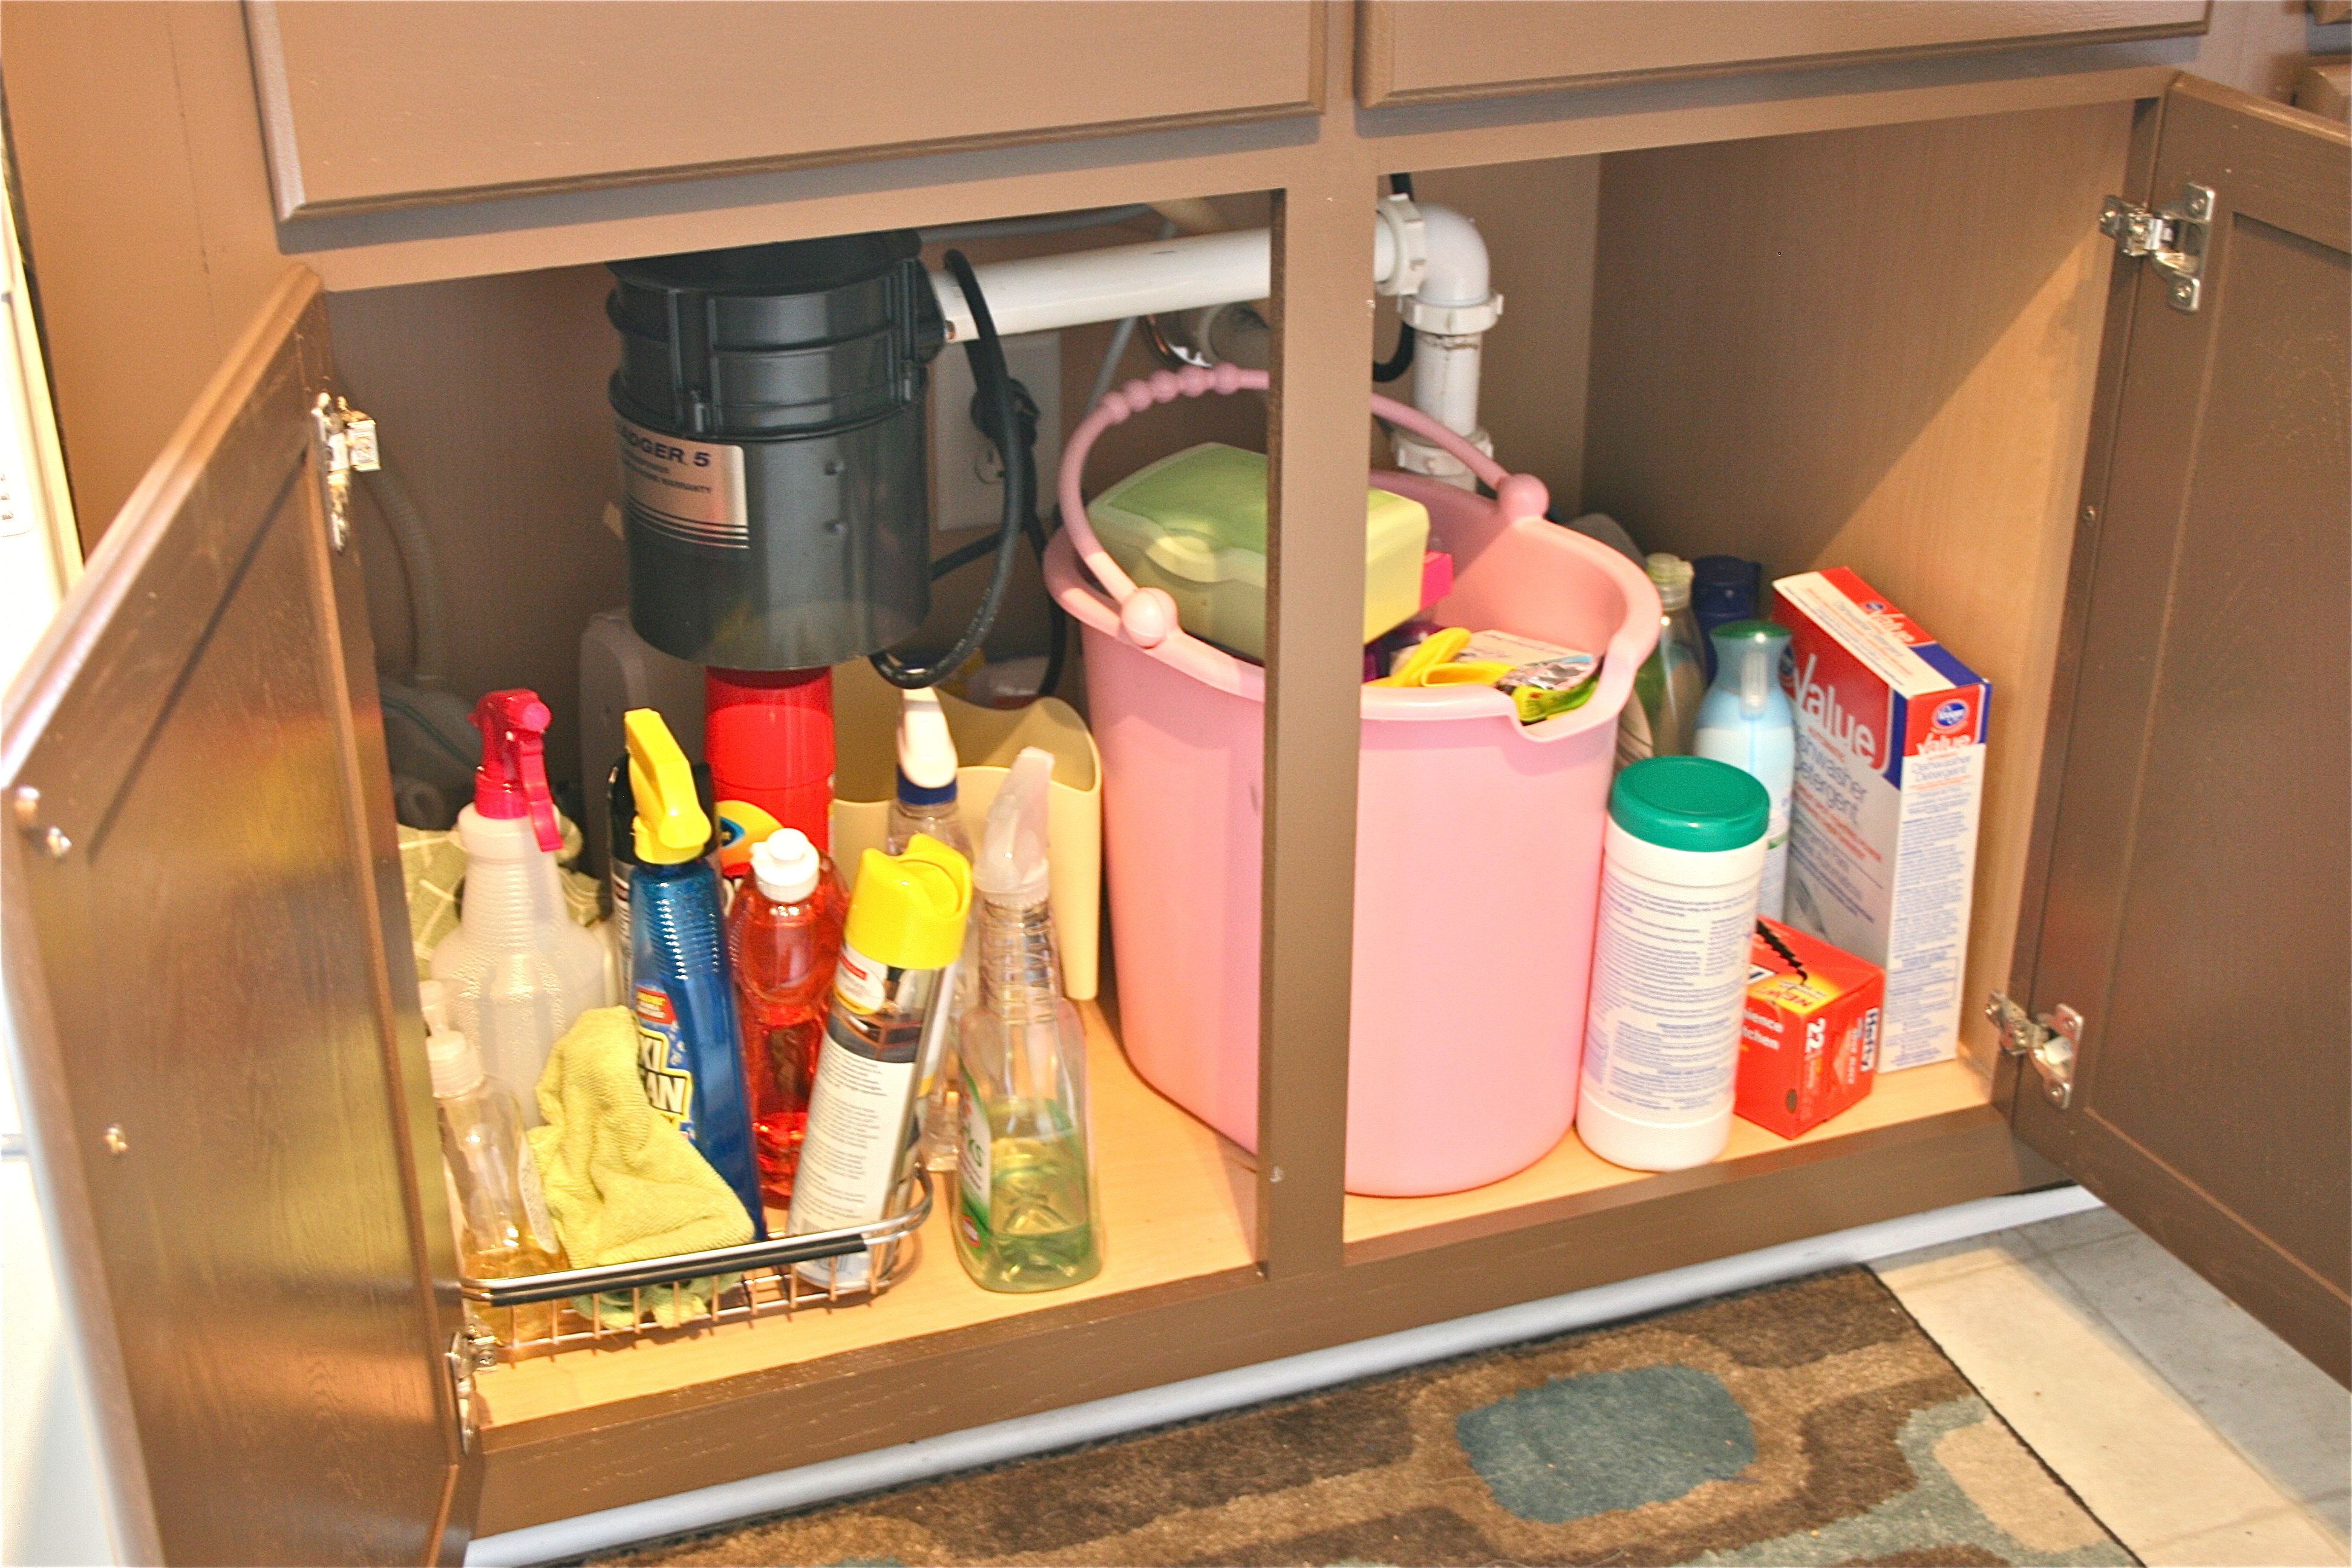 http://dreamgreendiy.com/2012/01/23/pinspiration-monday-shoe-rack-turned-cleaning-supply-storage/img_9878/